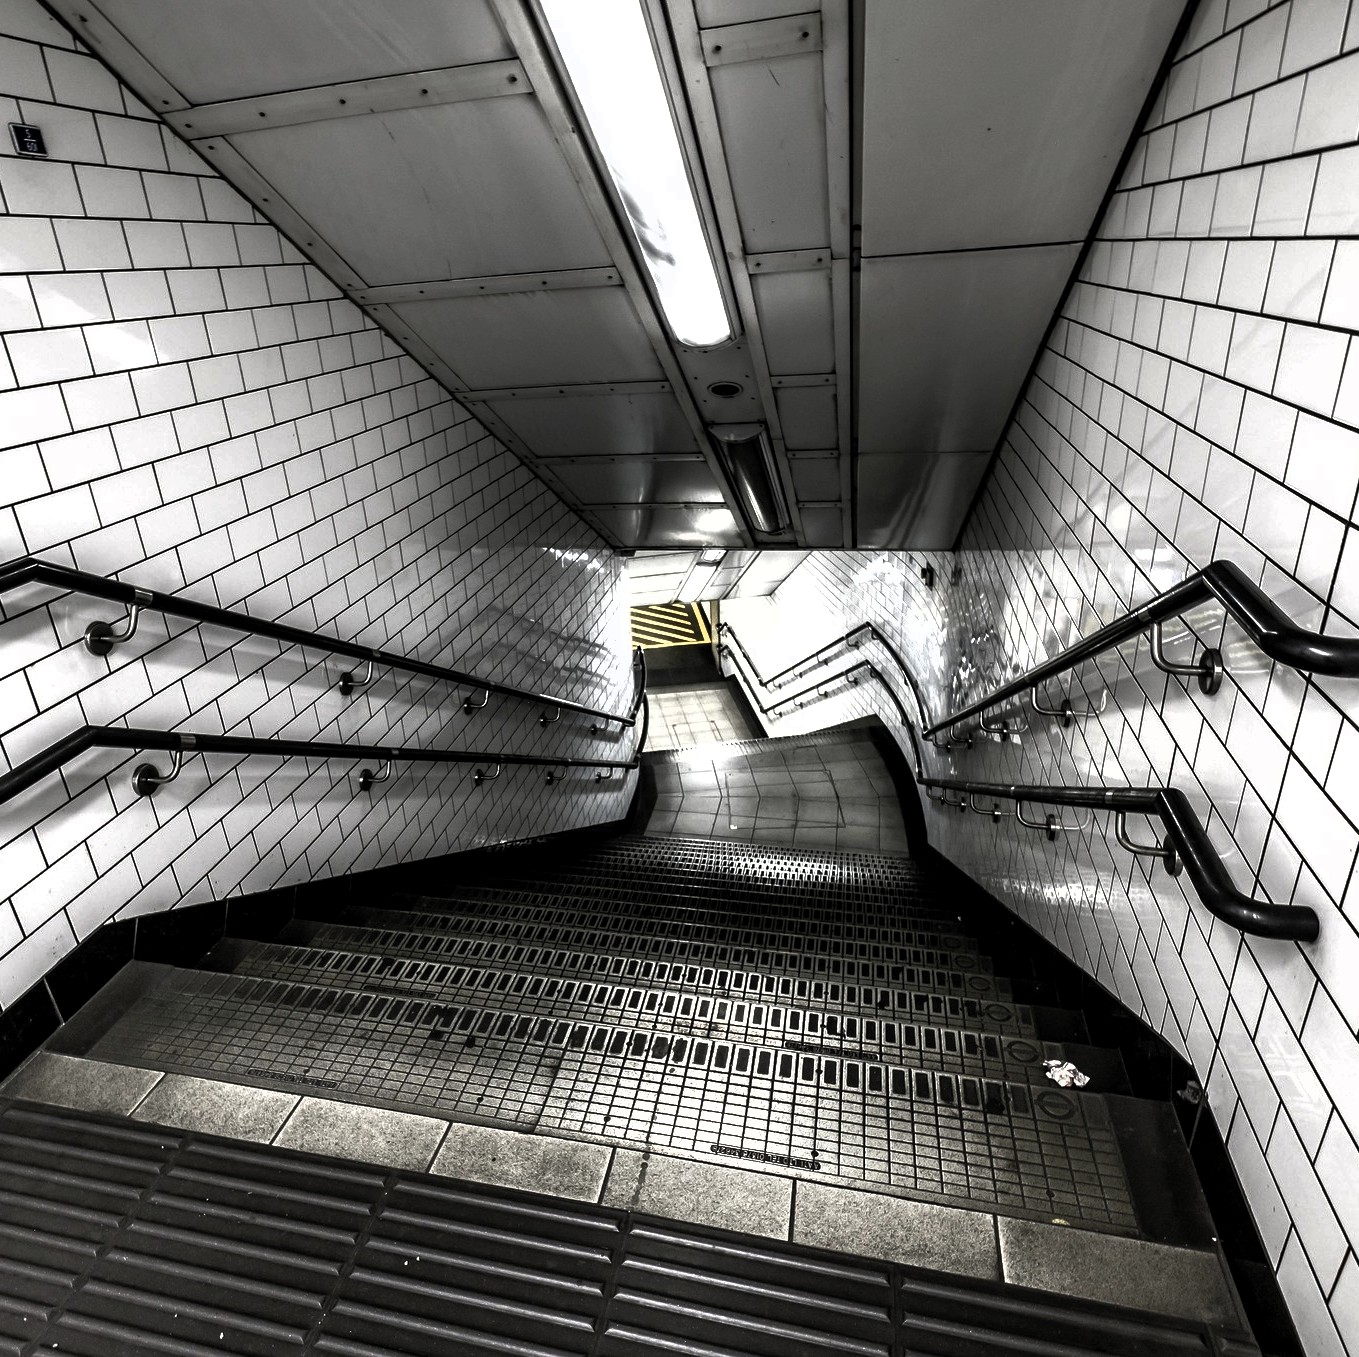 Walk down into the London underground